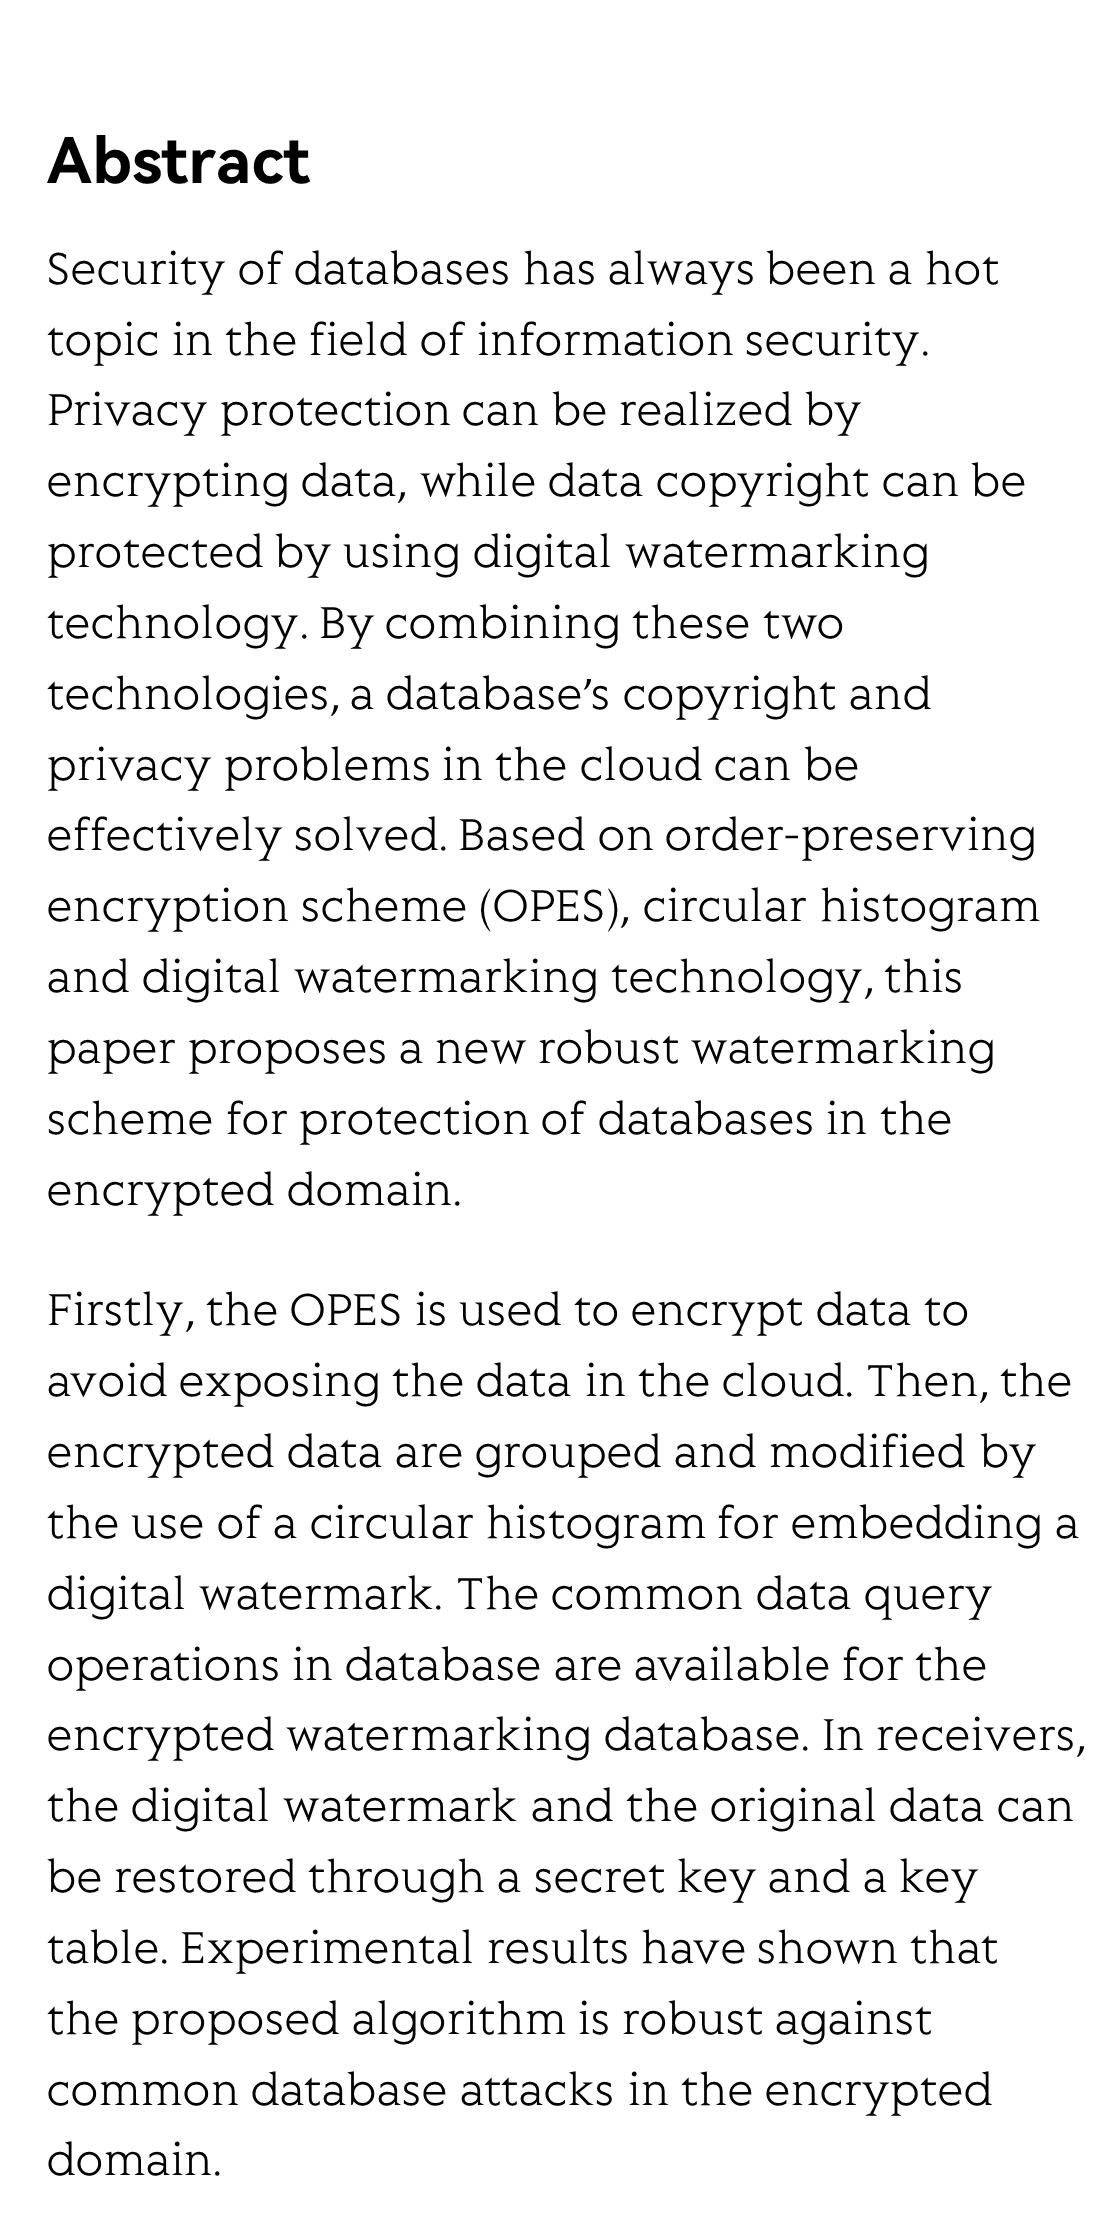 Robust watermarking of databases in order-preserving encrypted domain_2